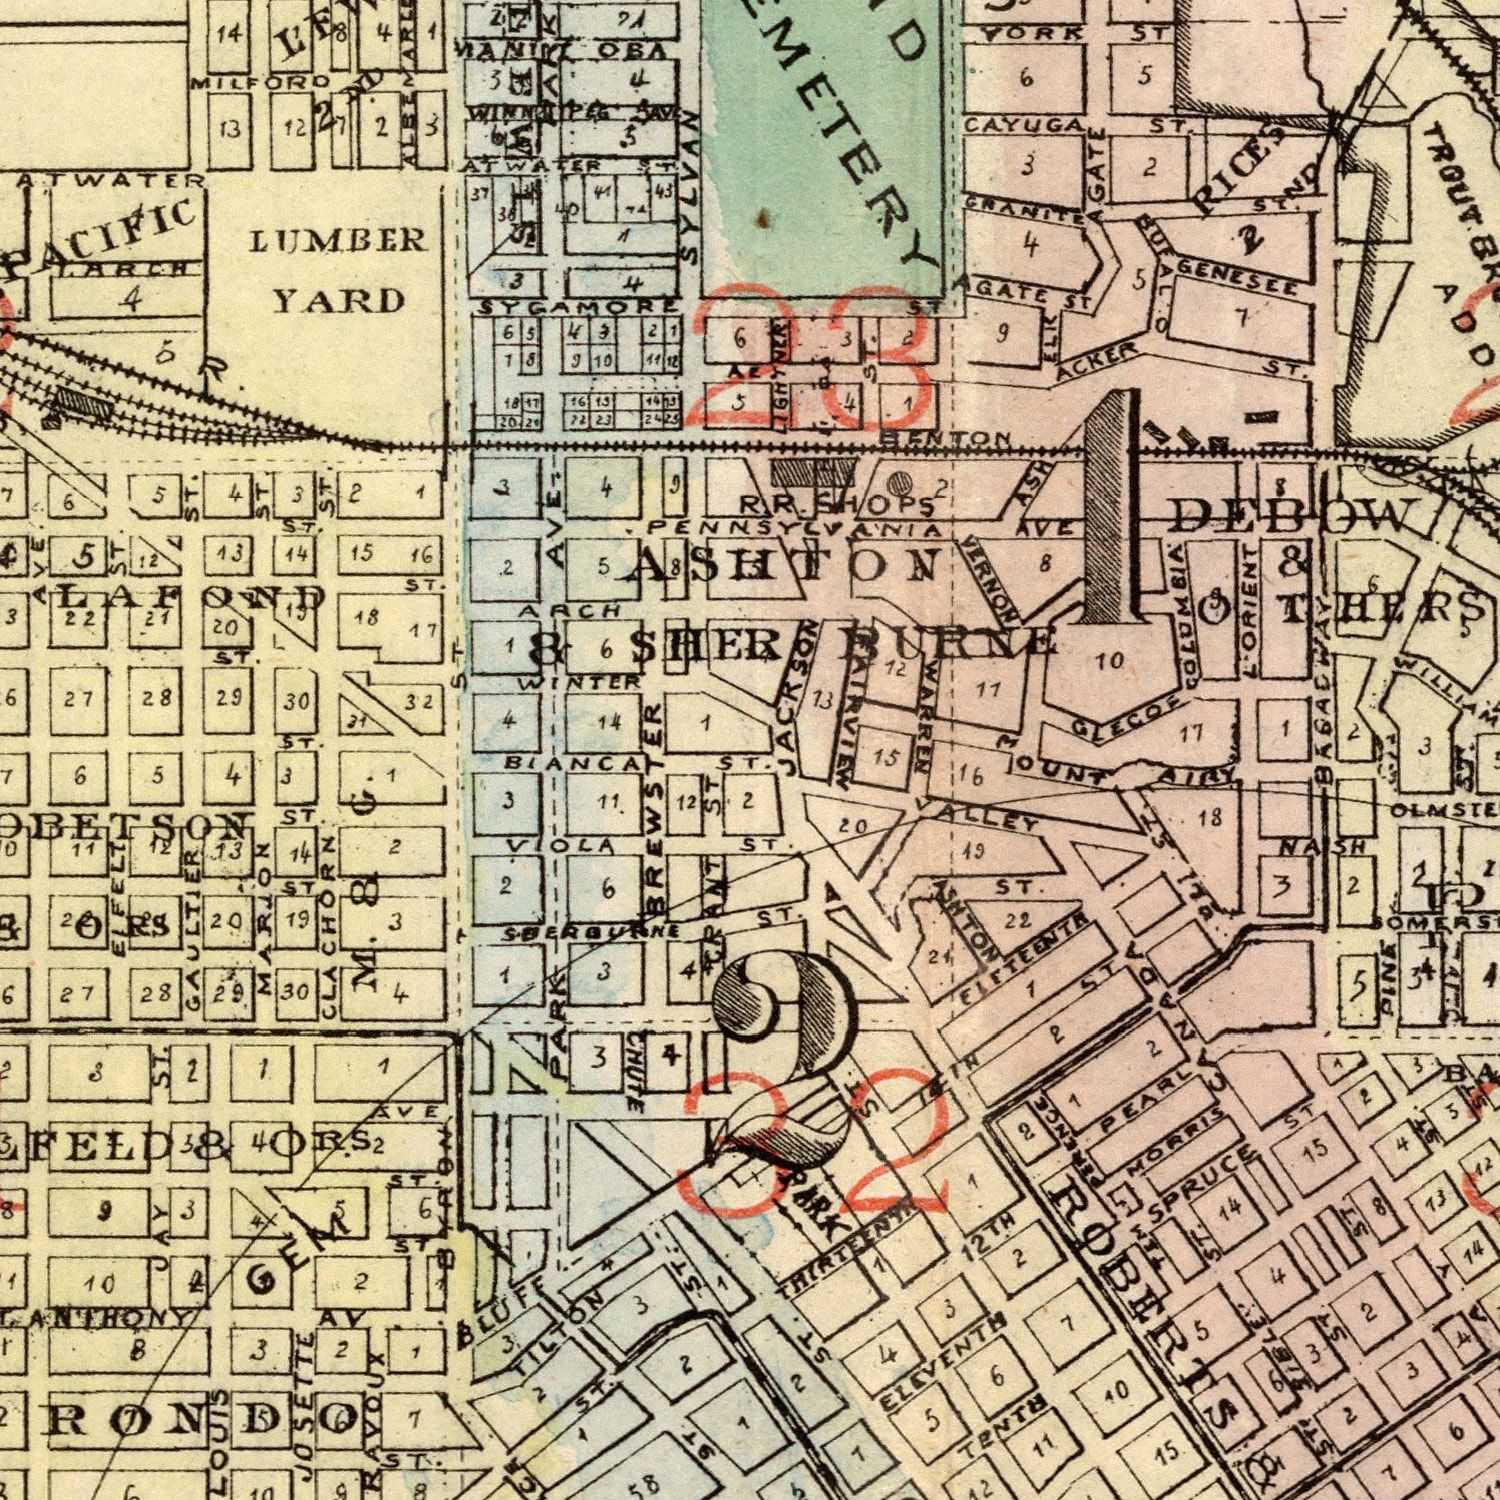 Saint Paul Map Print, Minnesota, USA — Maps As Art